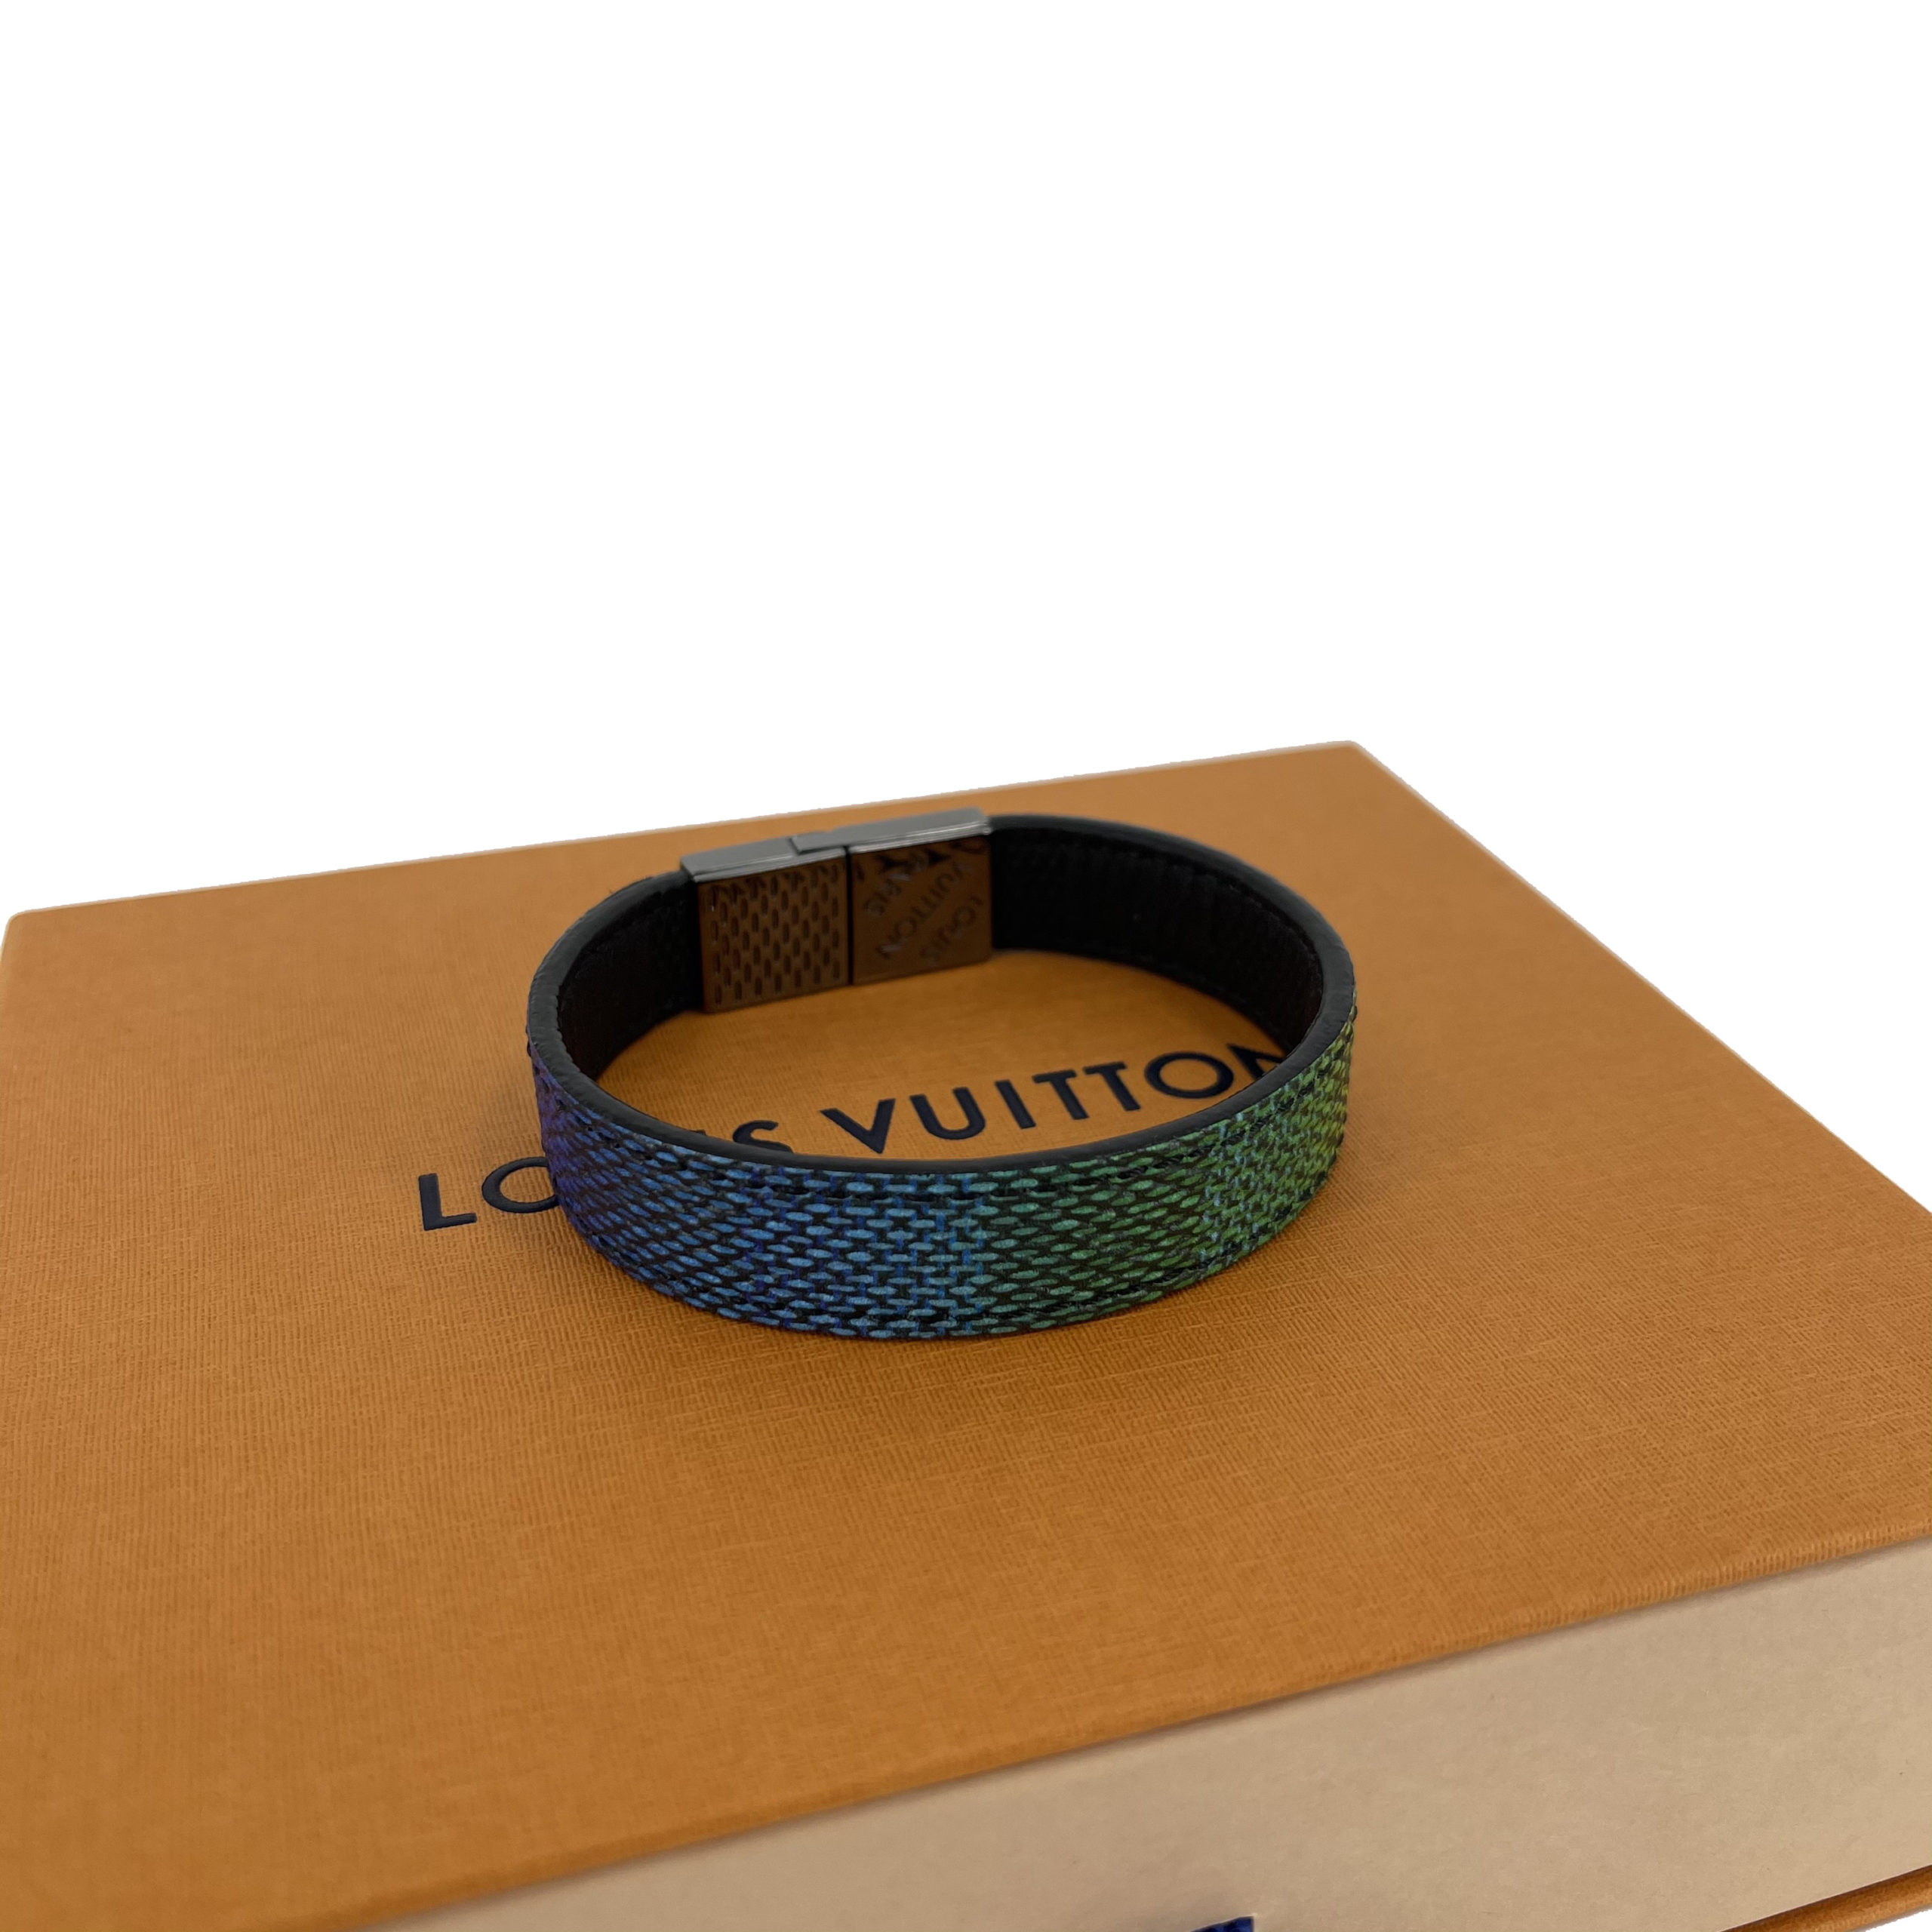 Louis Vuitton, Jewelry, Sold Lvuitton Pull It Reversible Damier Bracelet